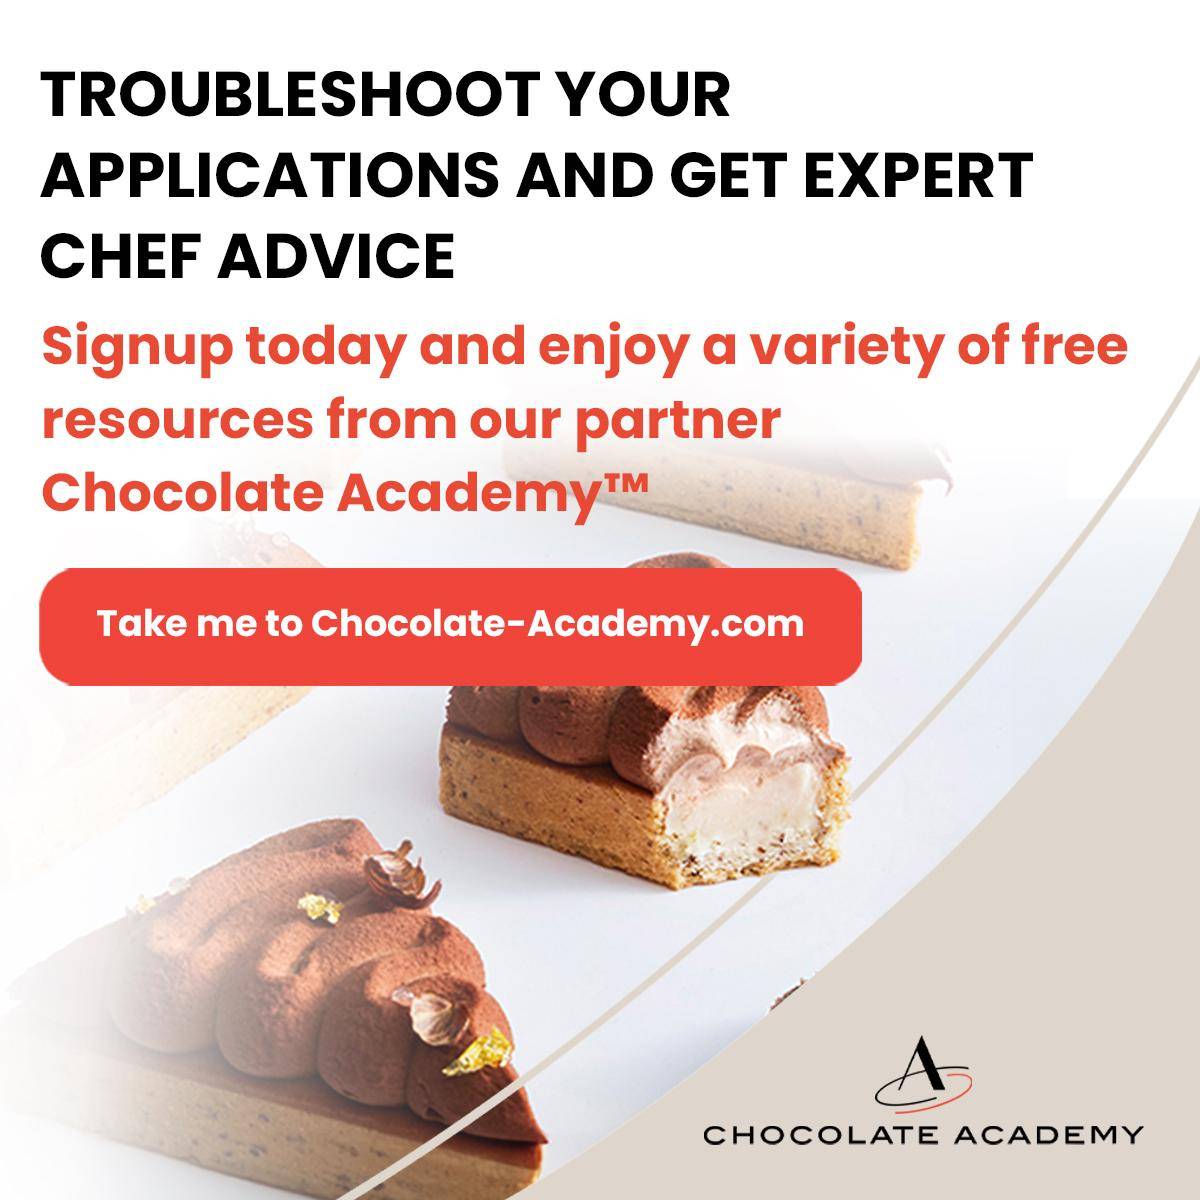 Visit chocolate-academy.com